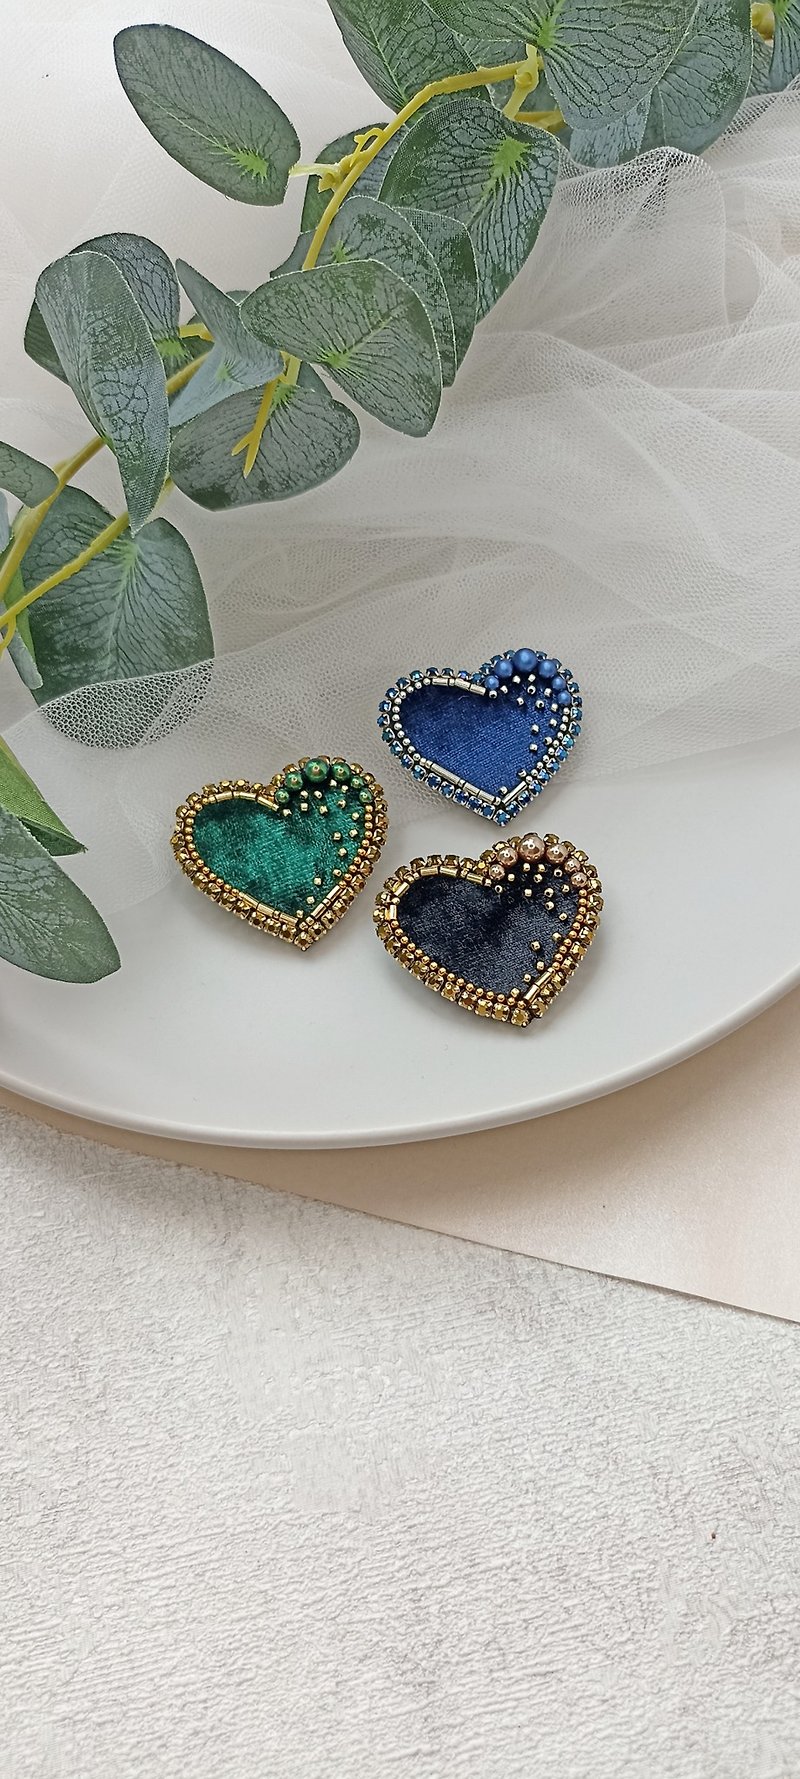 Handmade heart brooch, black heart pin, blue heart brooch, green heart brooch - Brooches - Stainless Steel Gold